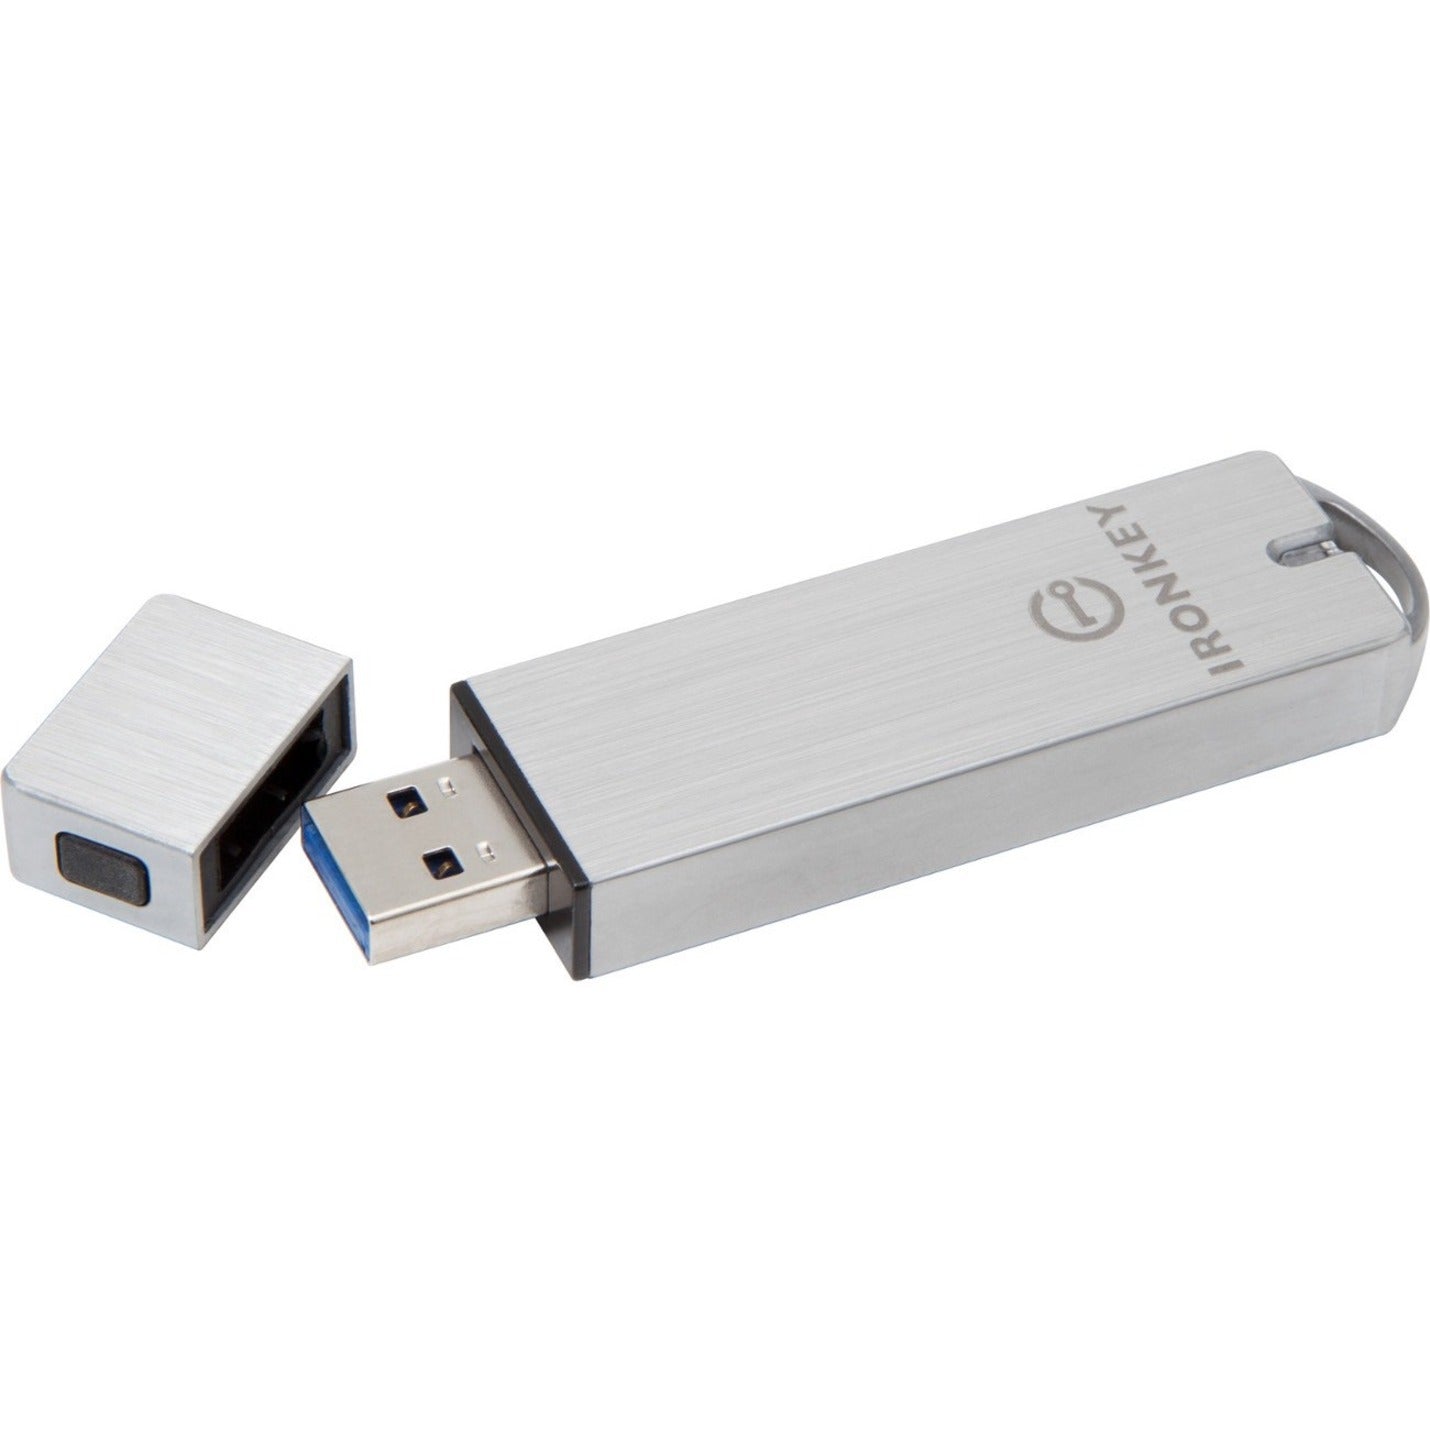 IronKey IKS1000E/64GB Enterprise S1000 Encrypted Flash Drive, 64GB USB 3.0, 256-bit AES Encryption